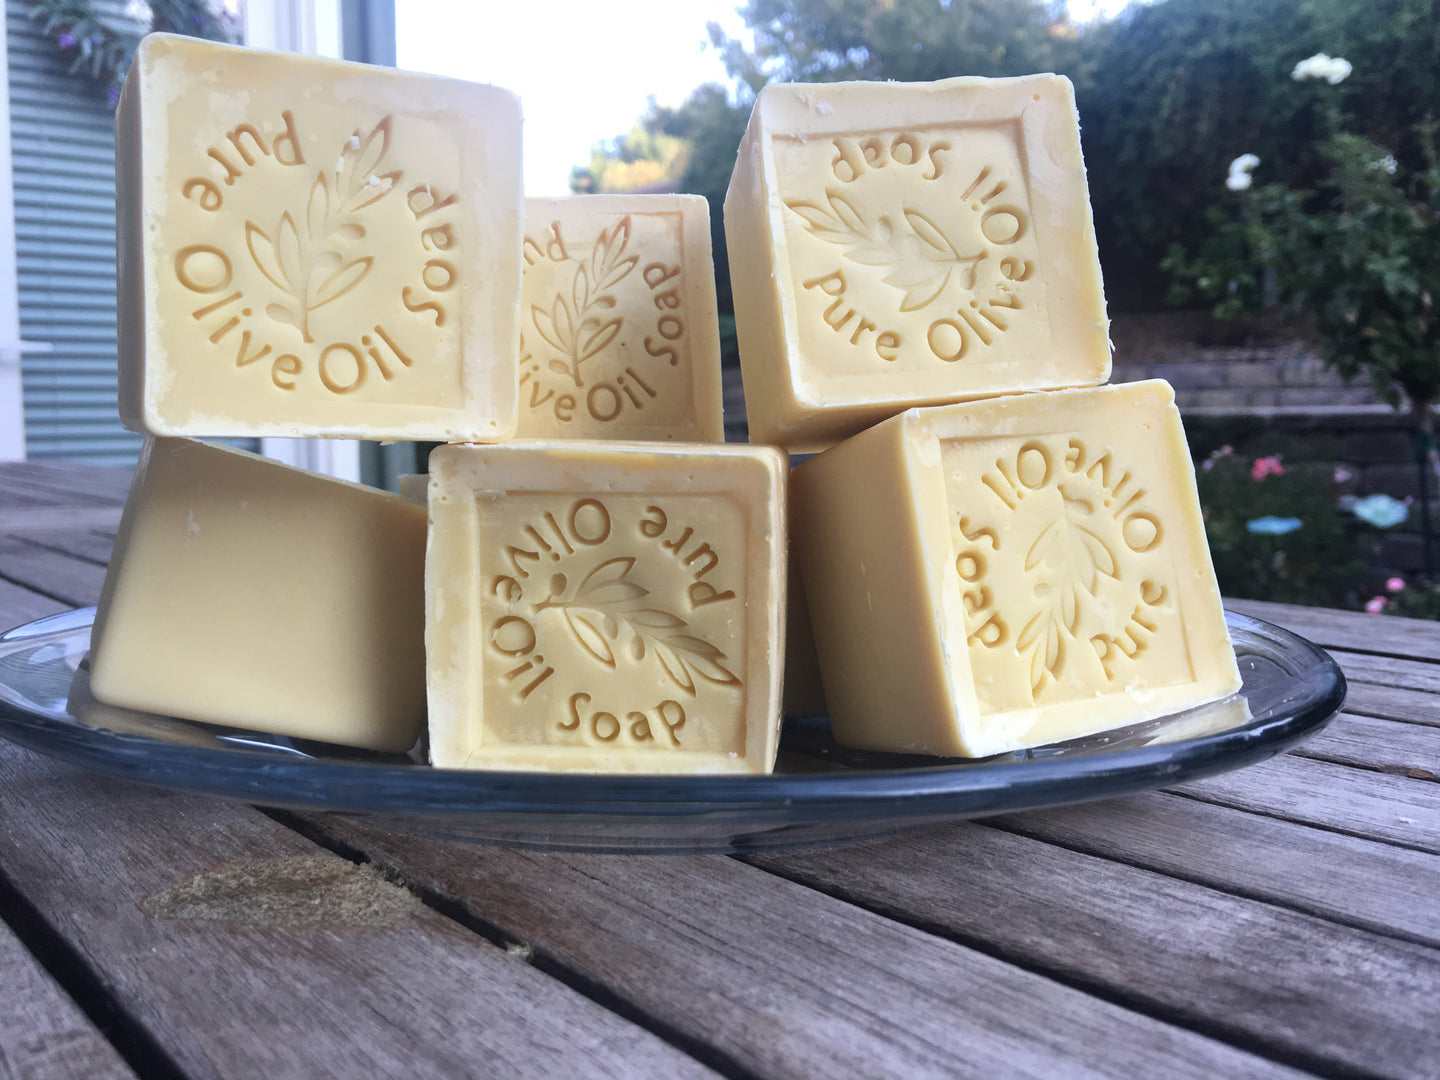 100% Olive Castile Cold Processed Soap Recipe - Aussie Soap Supplies